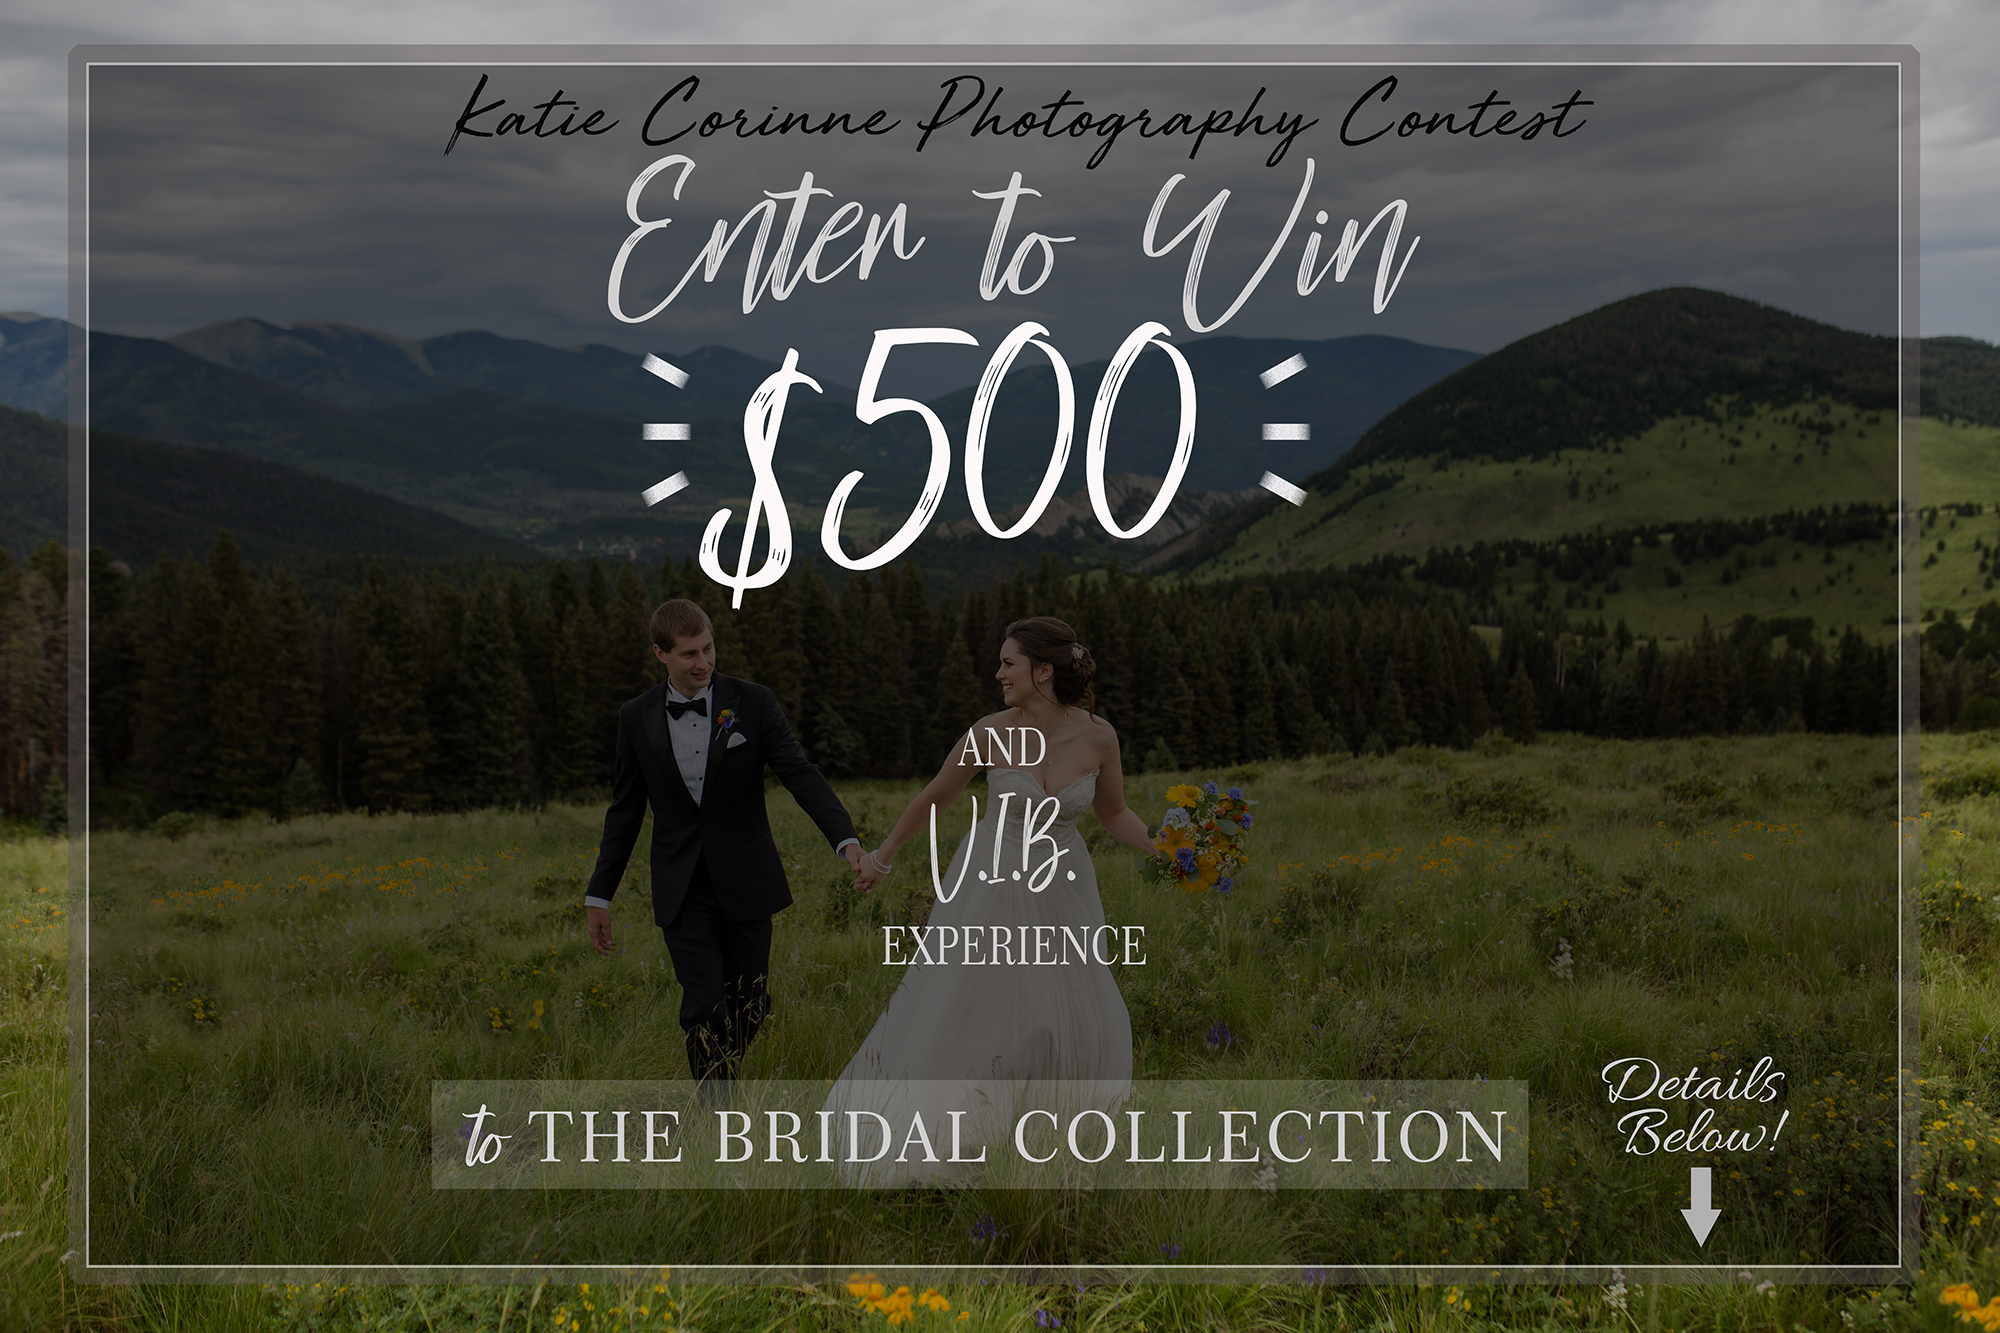 DREAM Colorado Wedding Contest Engaged Brides Contest Enter to WIN